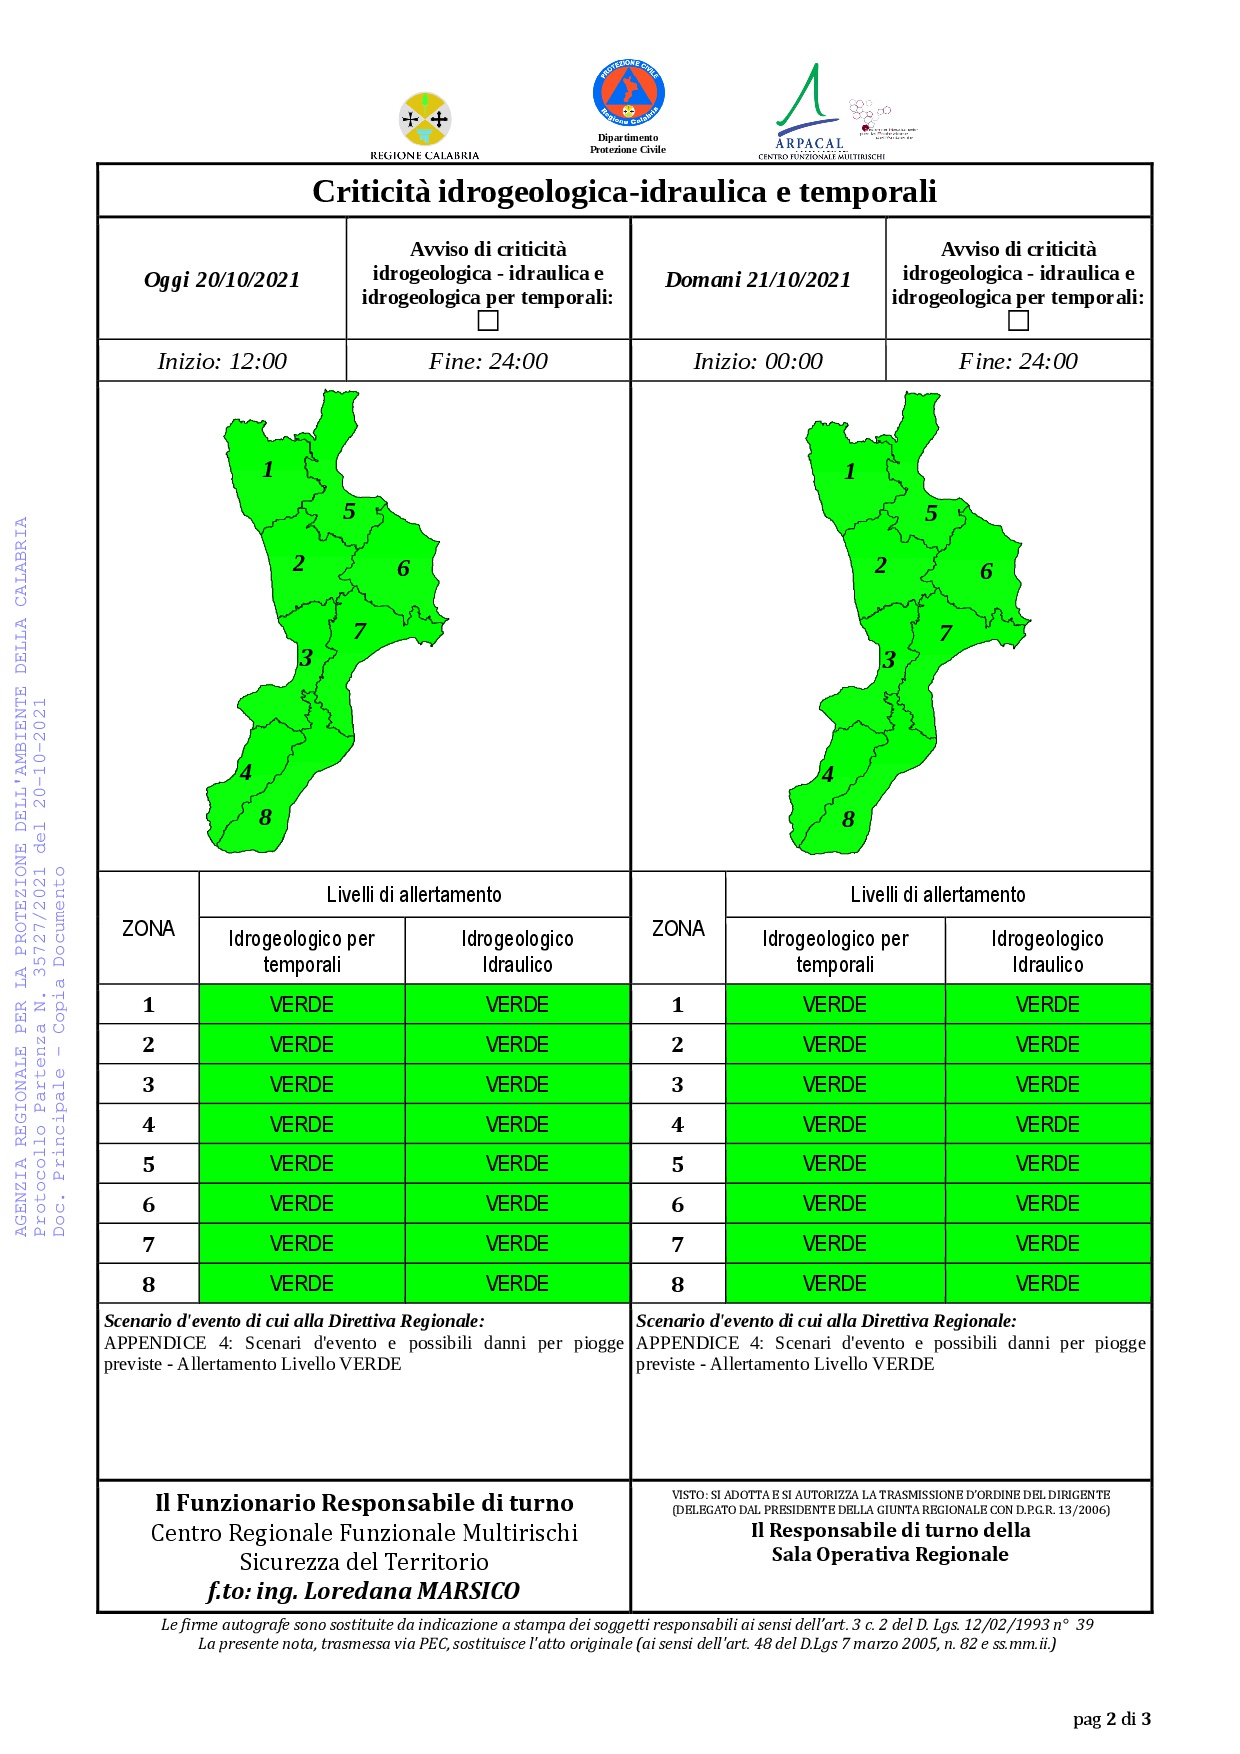 Criticità idrogeologica-idraulica e temporali in Calabria 20-10-2021